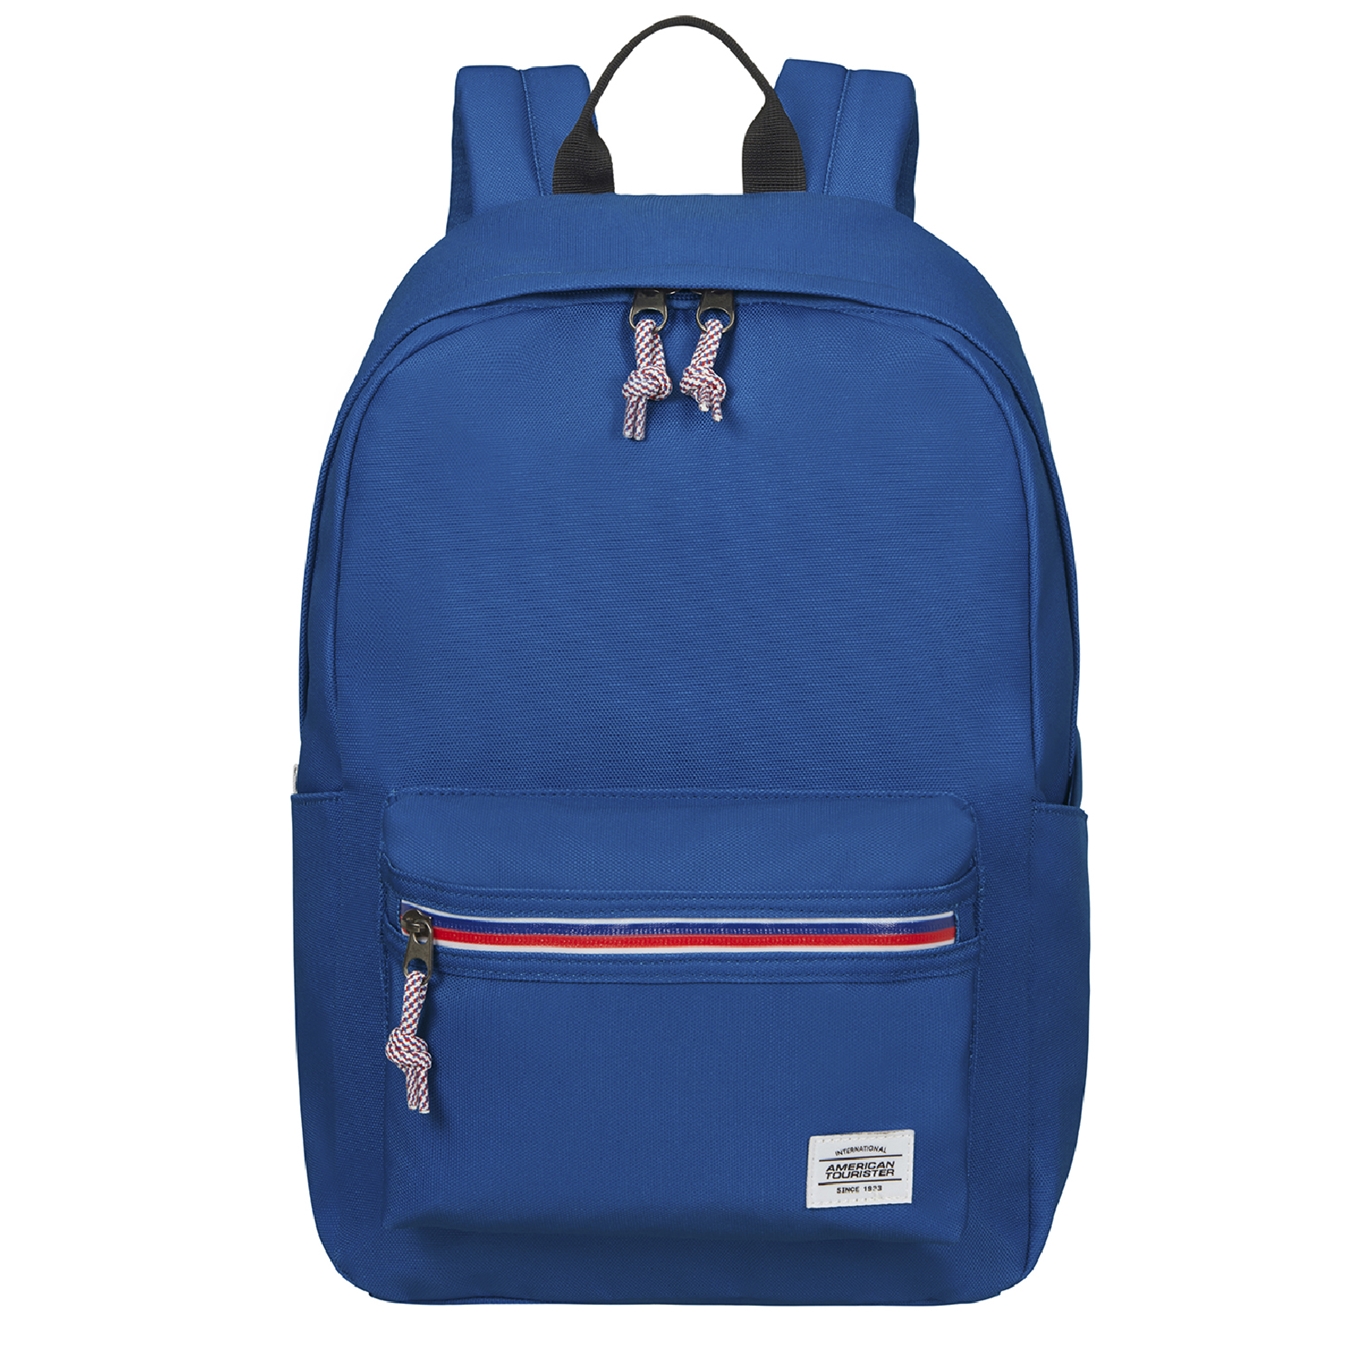 American Tourister Upbeat Backpack Zip atlantic blue backpack - Tas2go